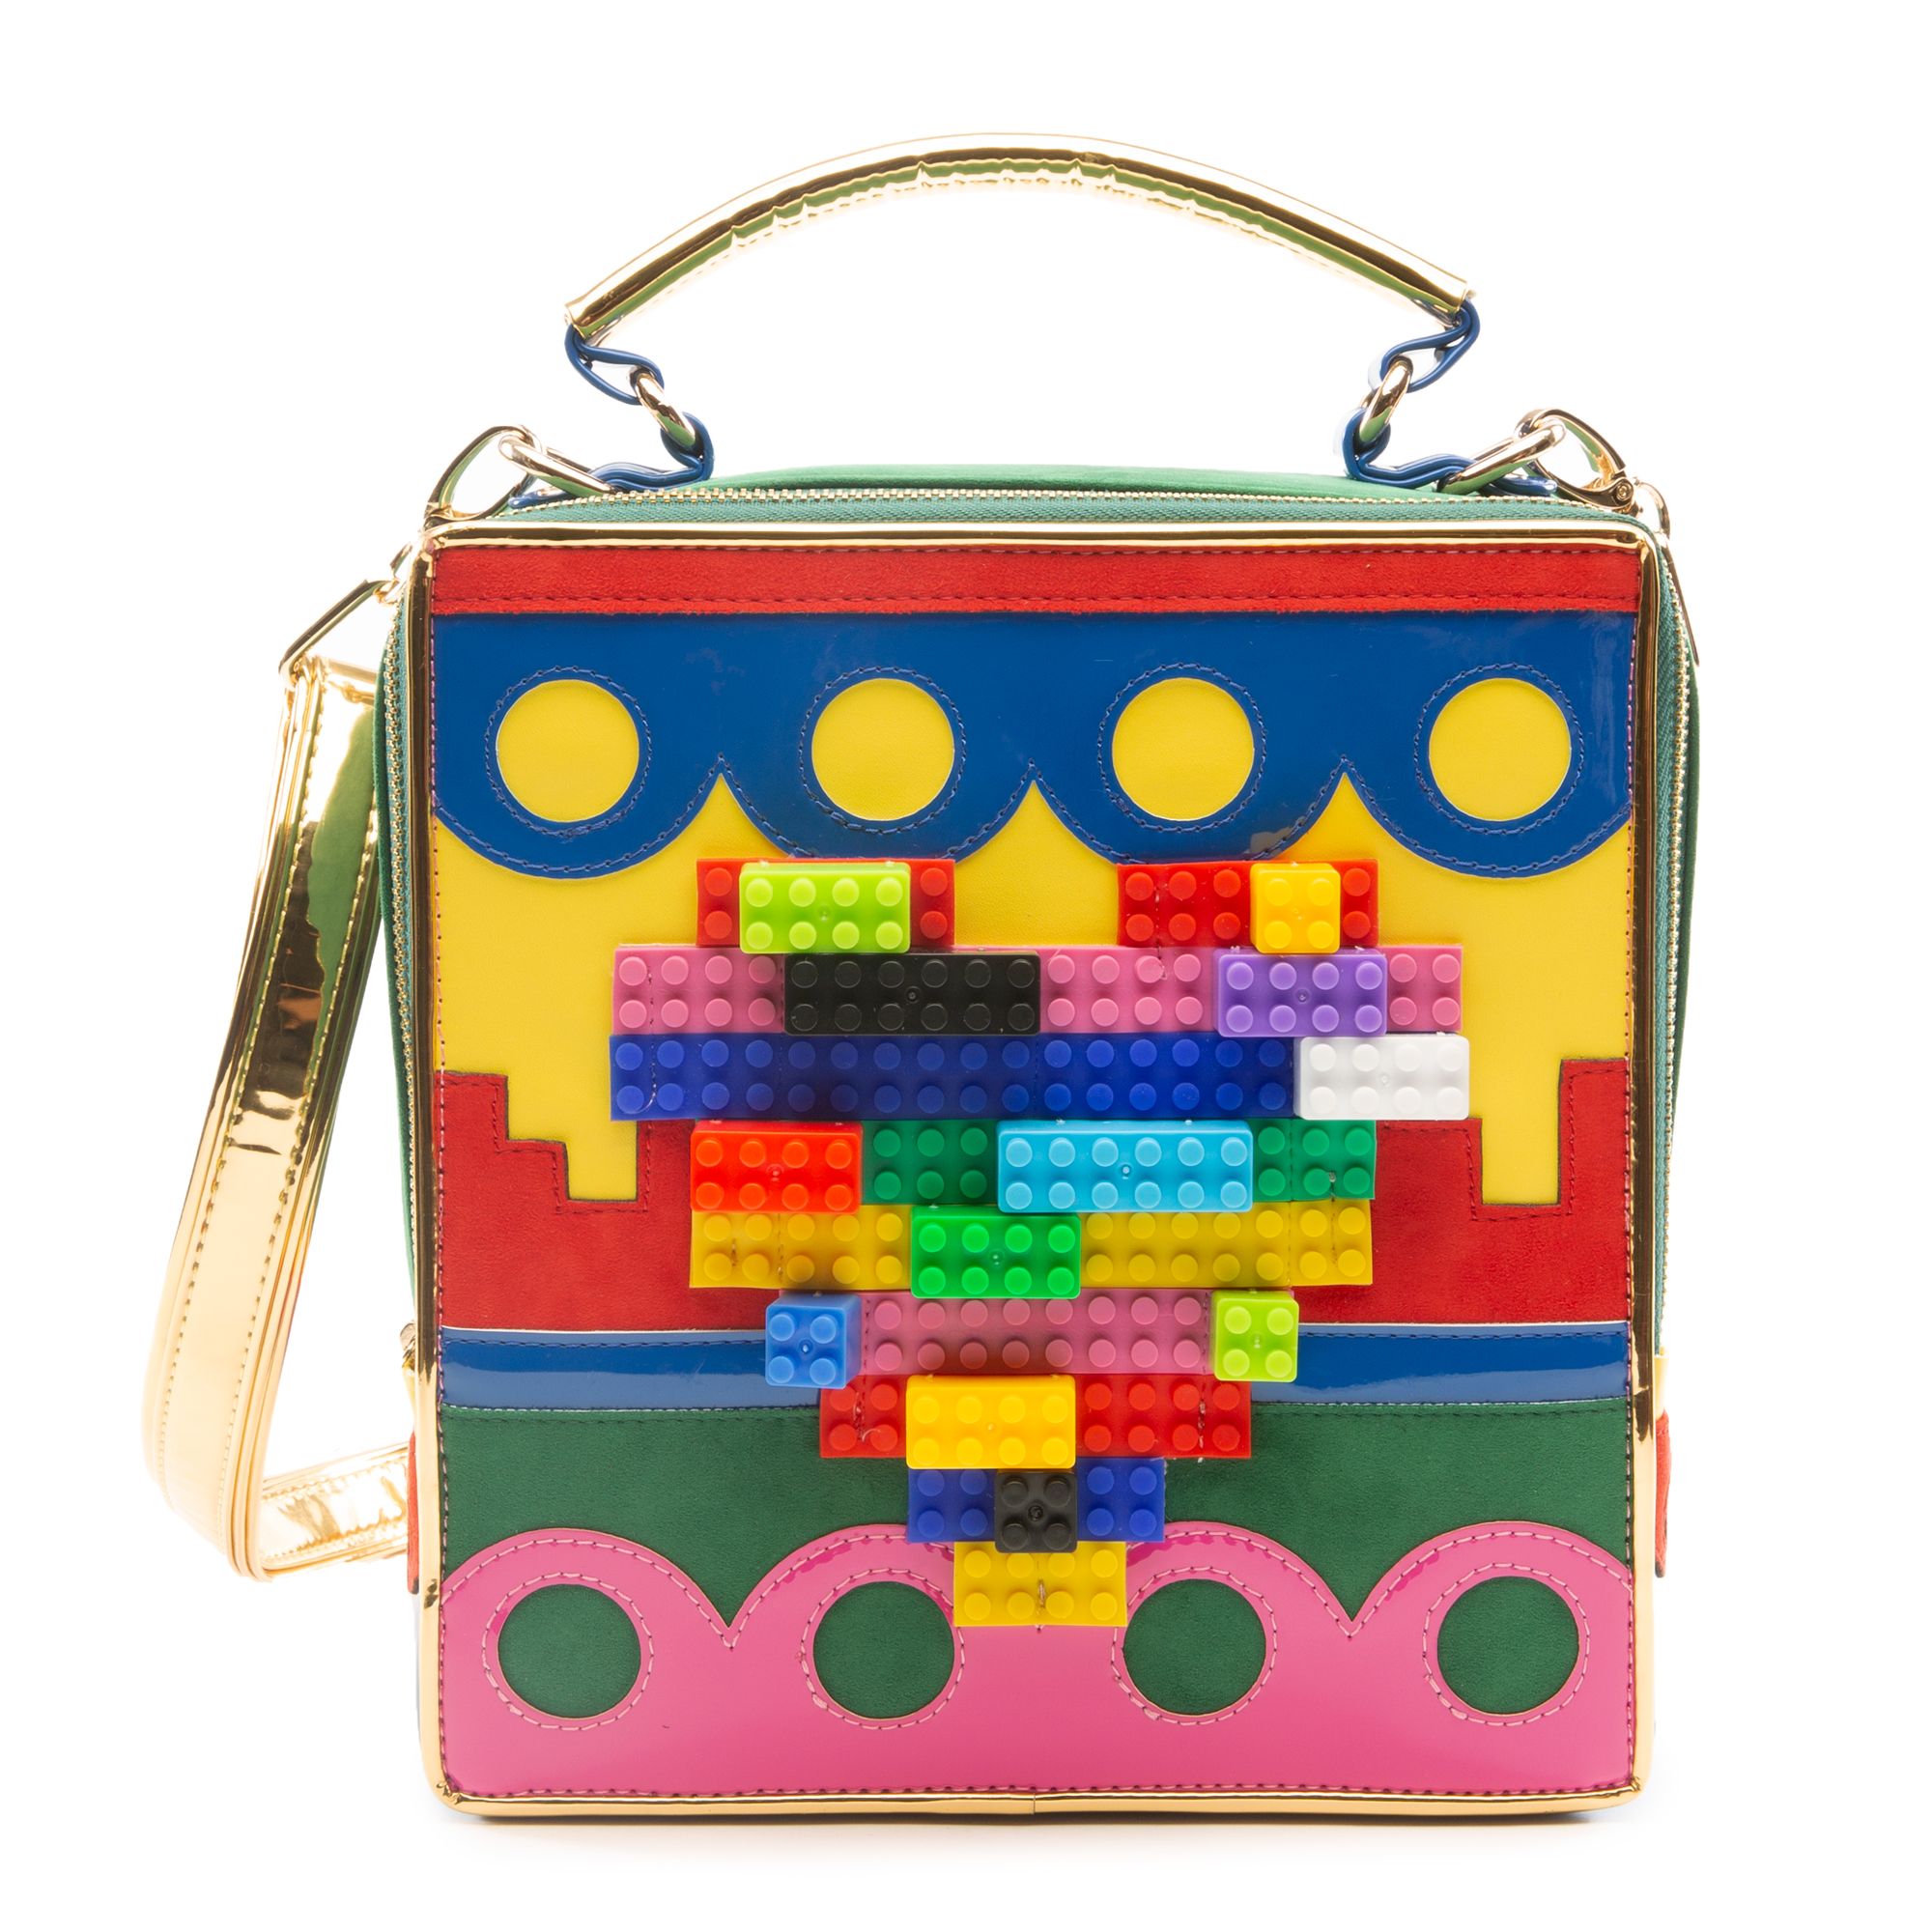 Lego Brick Crossbody Handbag